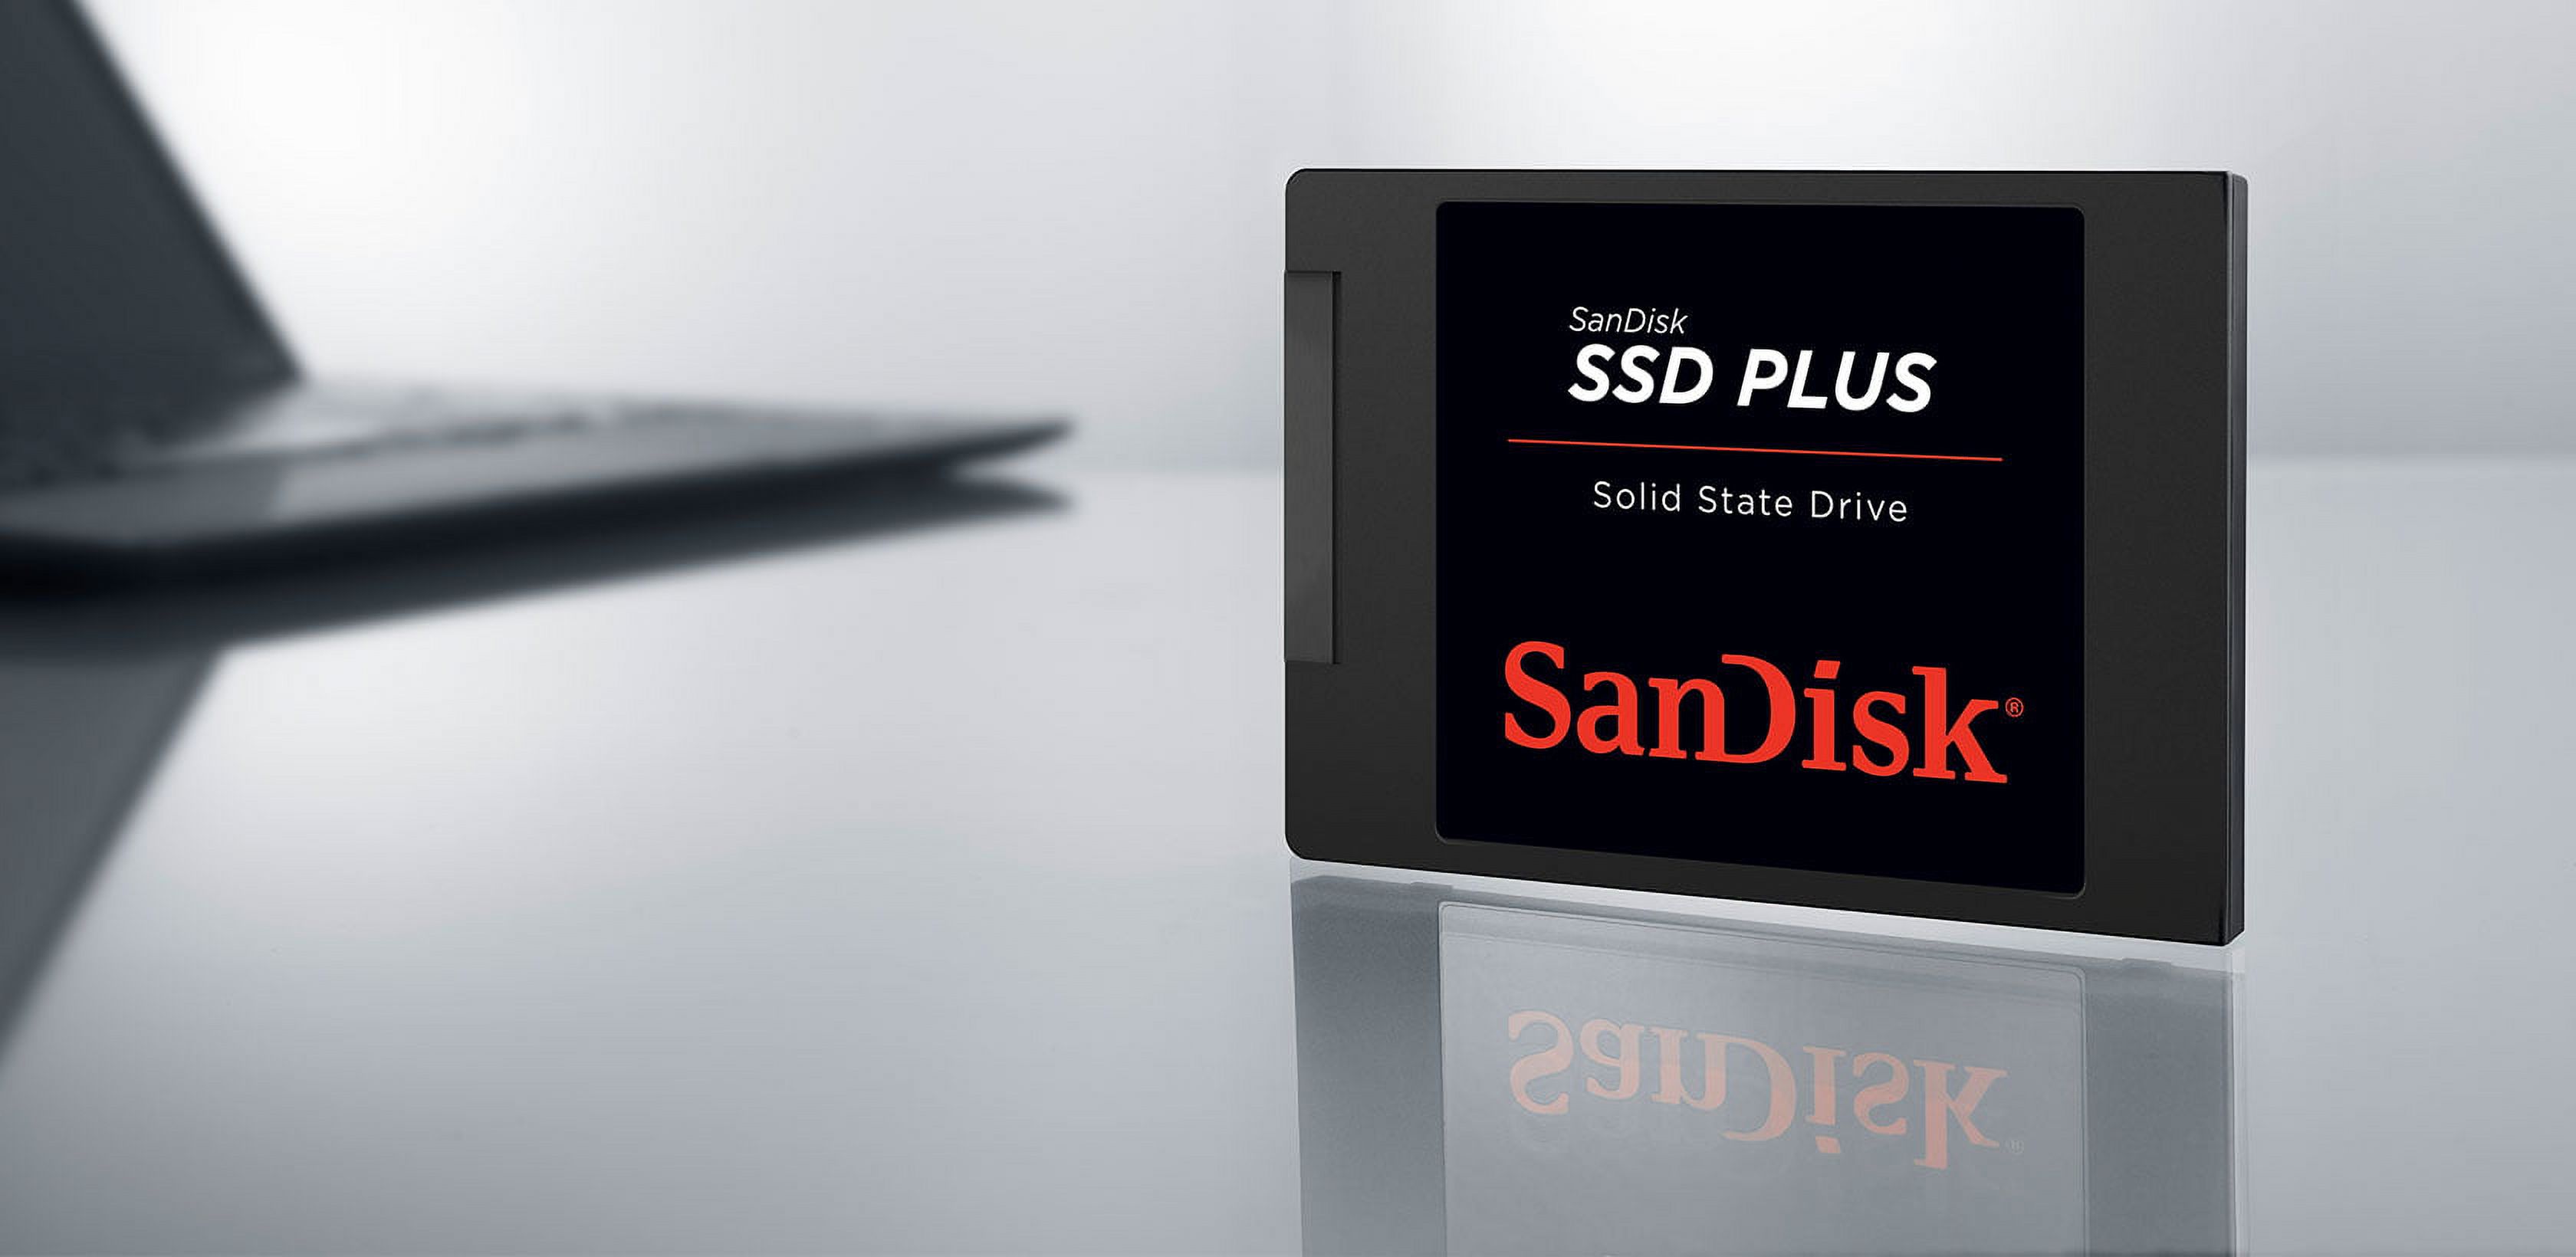 SanDisk 240GB SSD Plus, Internal Solid State Drive - SDSSDA-240G-G26 - image 3 of 3